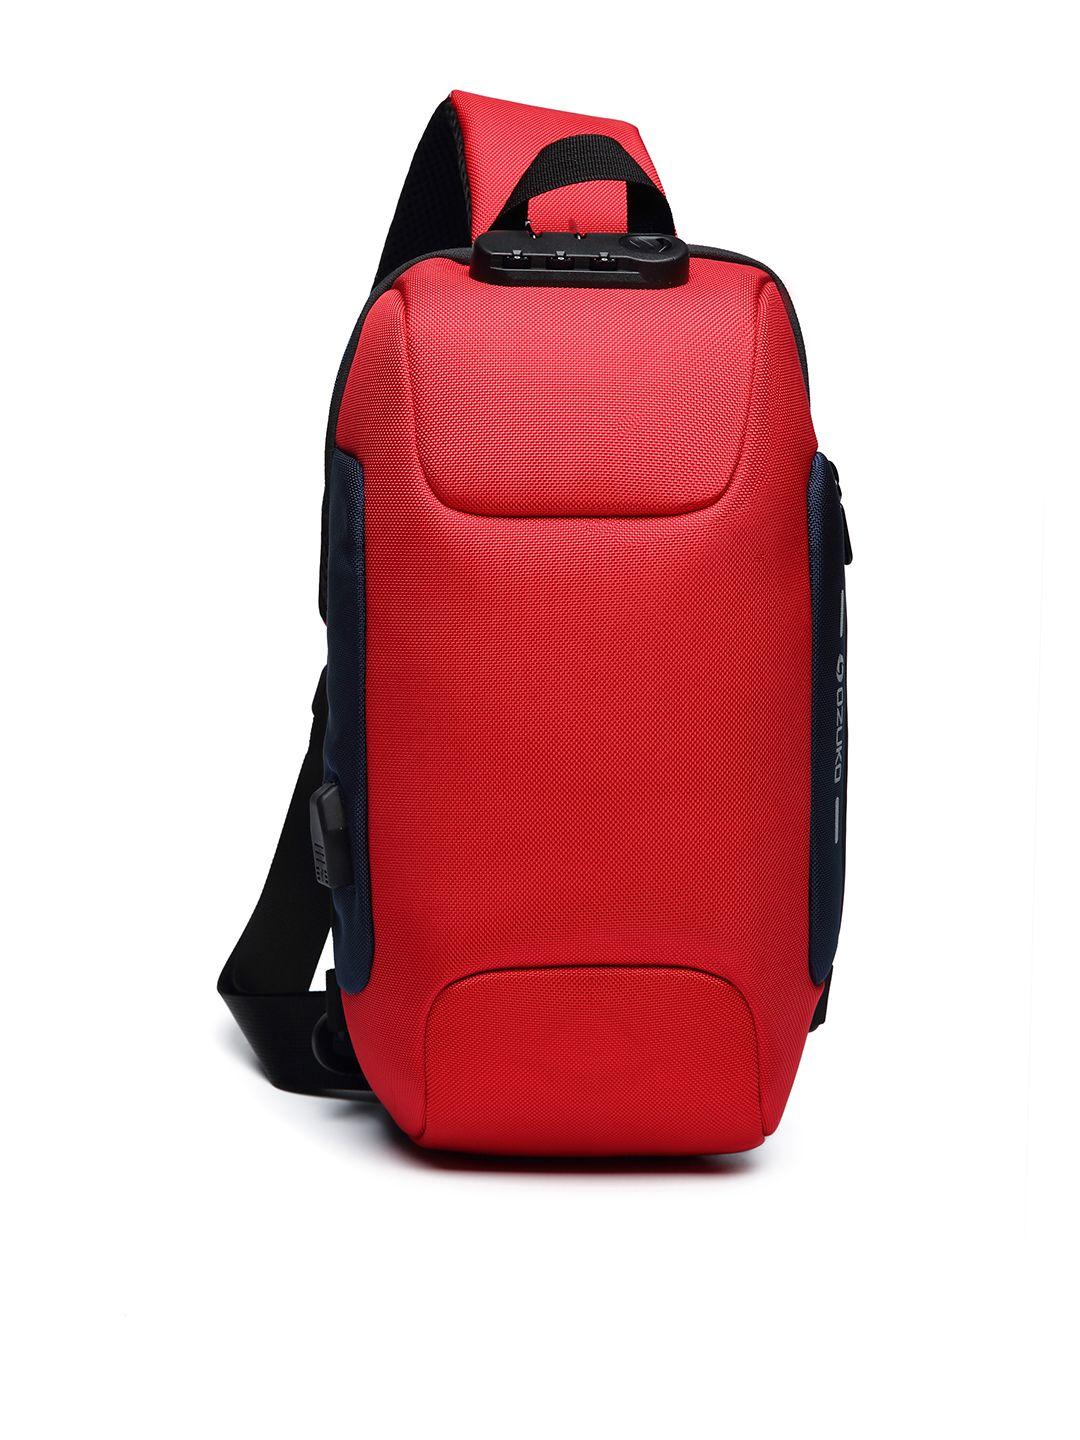 ozuko 9223l range soft case backpack